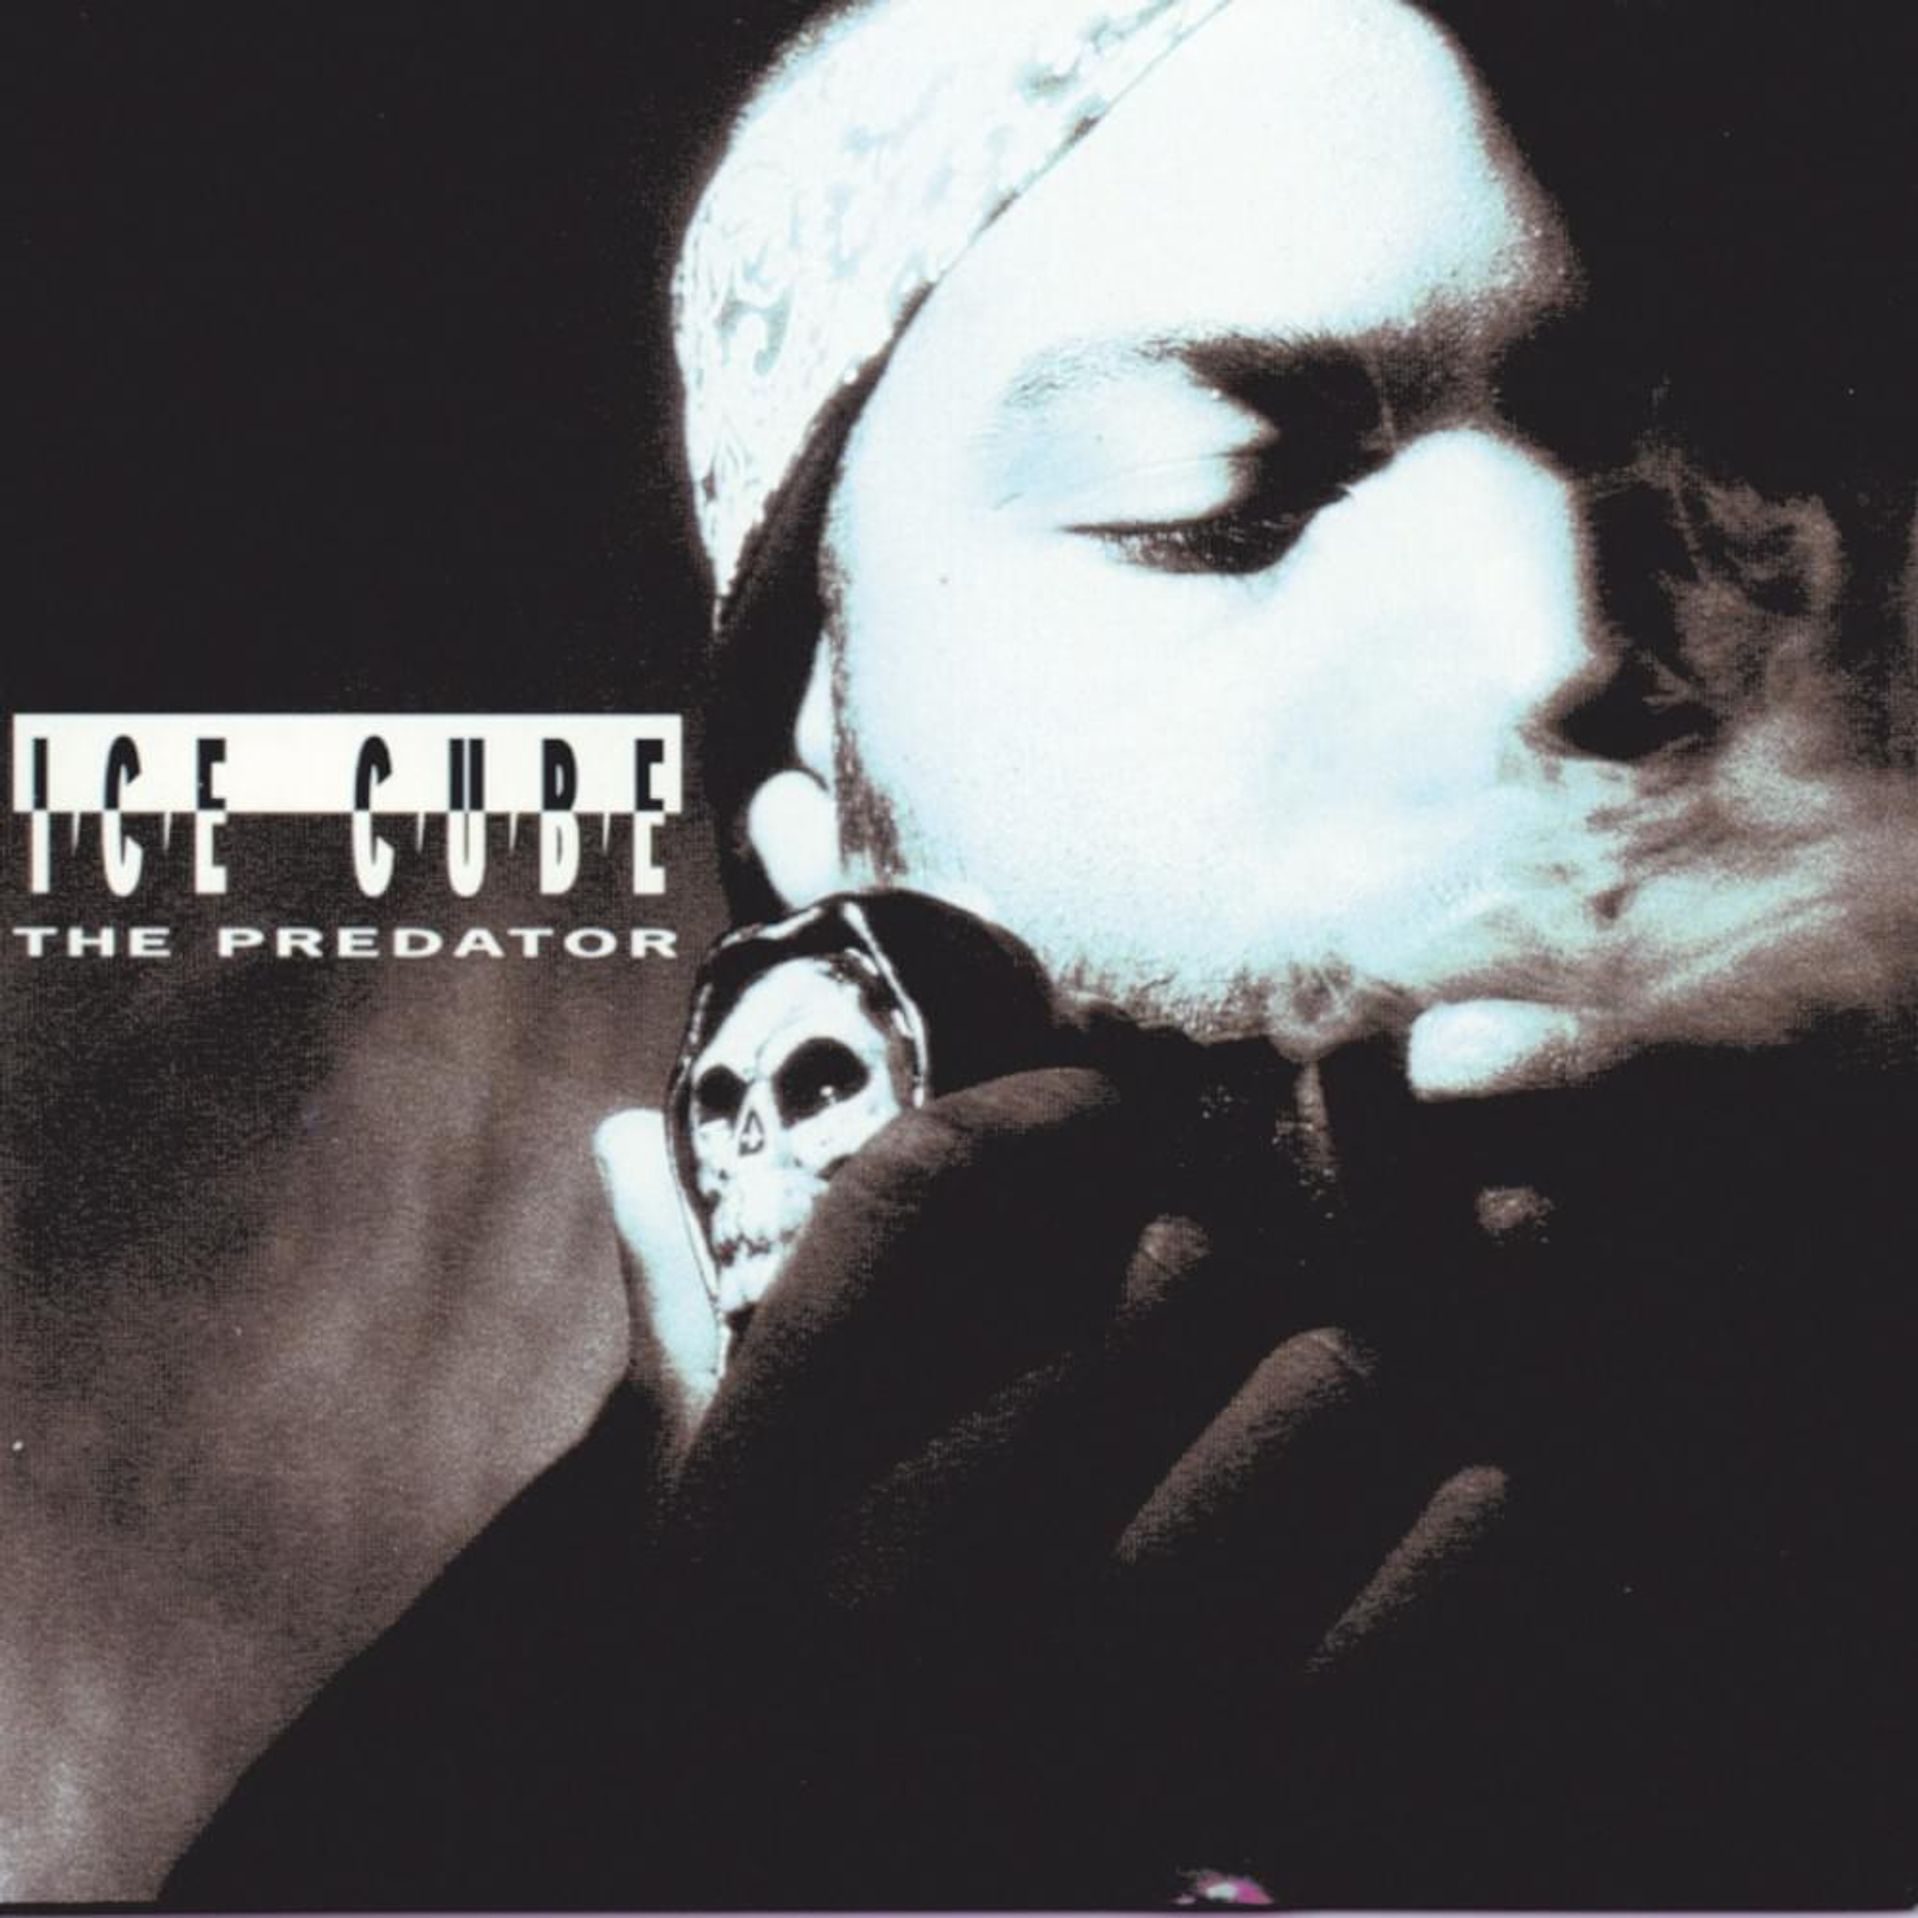 Album Title: The Predator by: Ice Cube